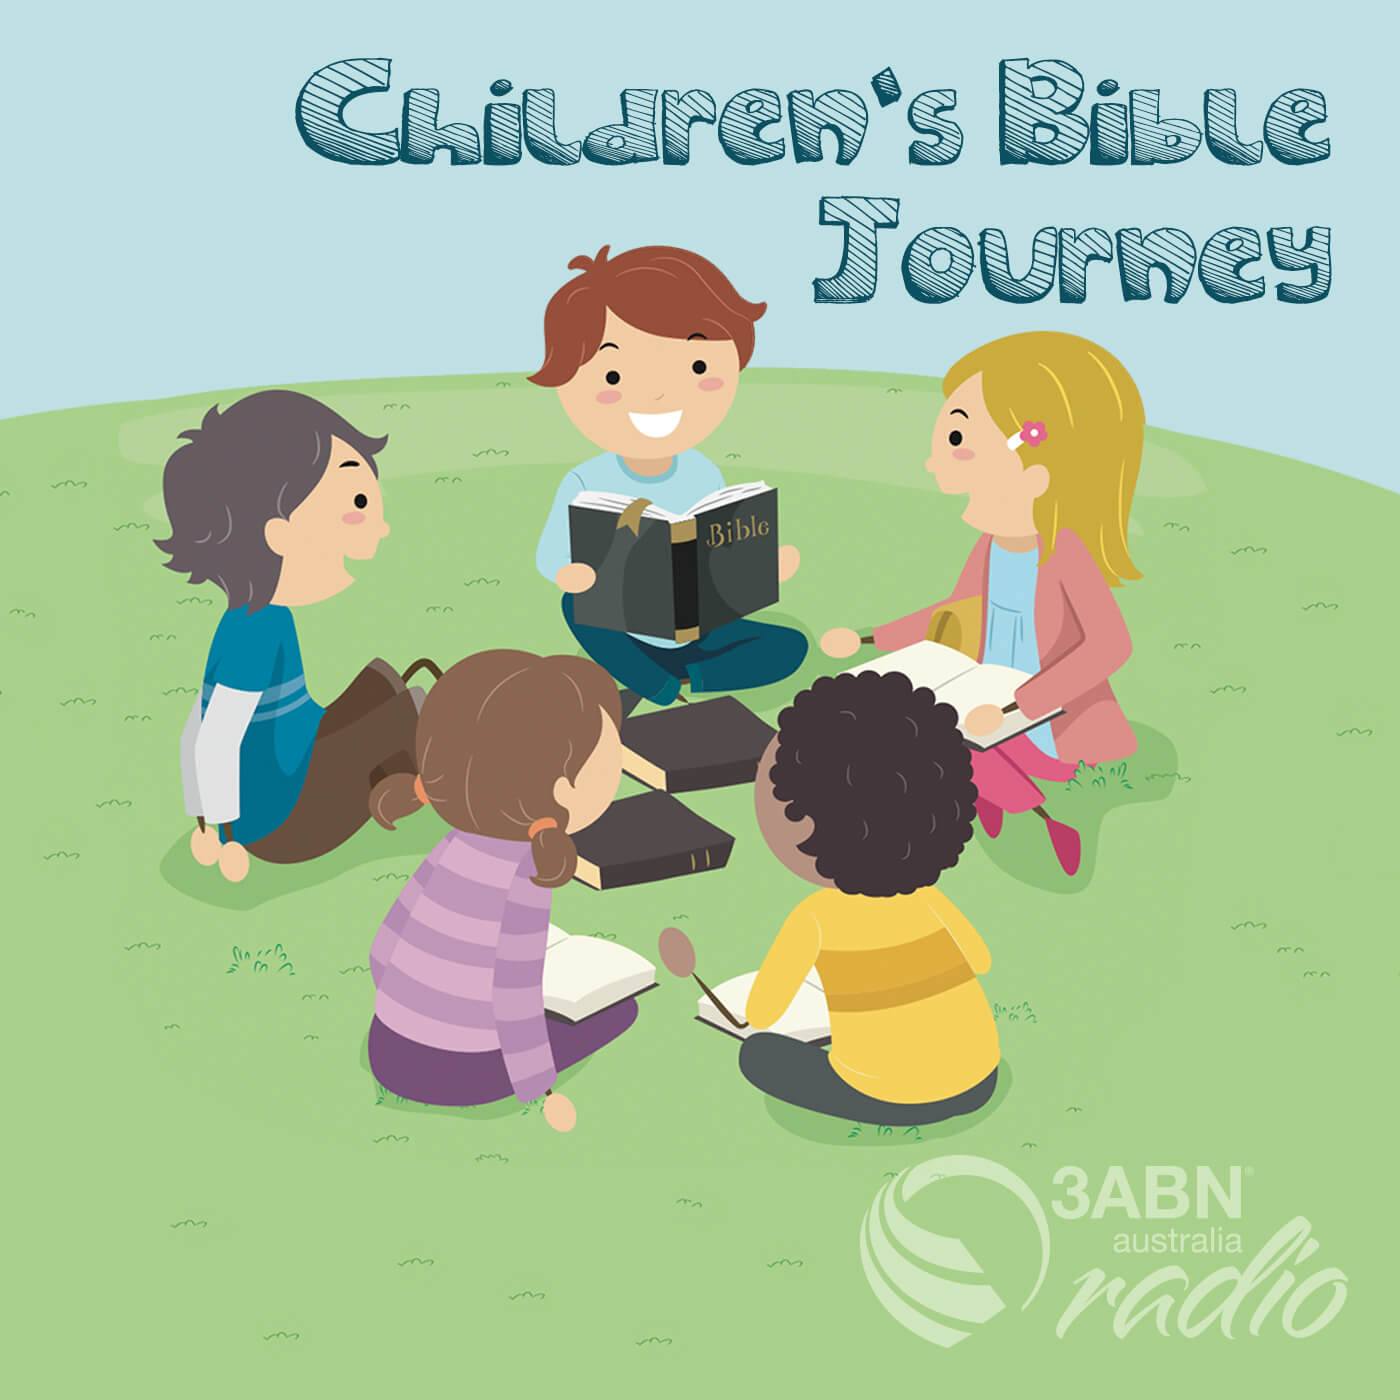 Children's Bible Journey - 2159